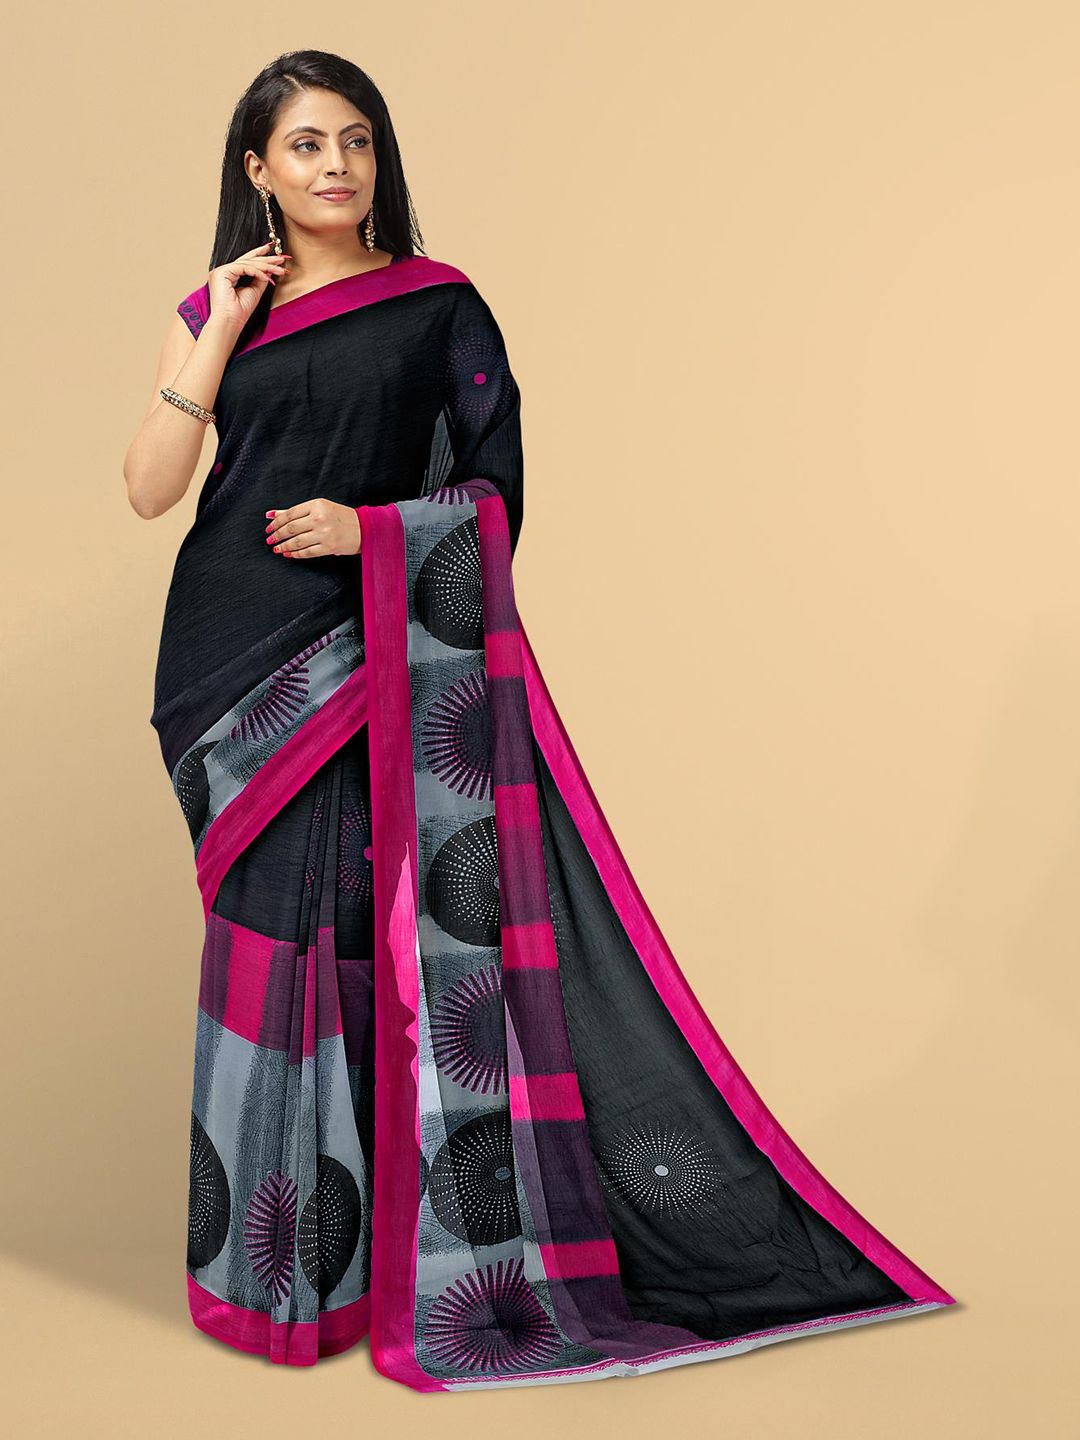 Kalamandir Black & Pink Ethnic Motifs Saree Price in India